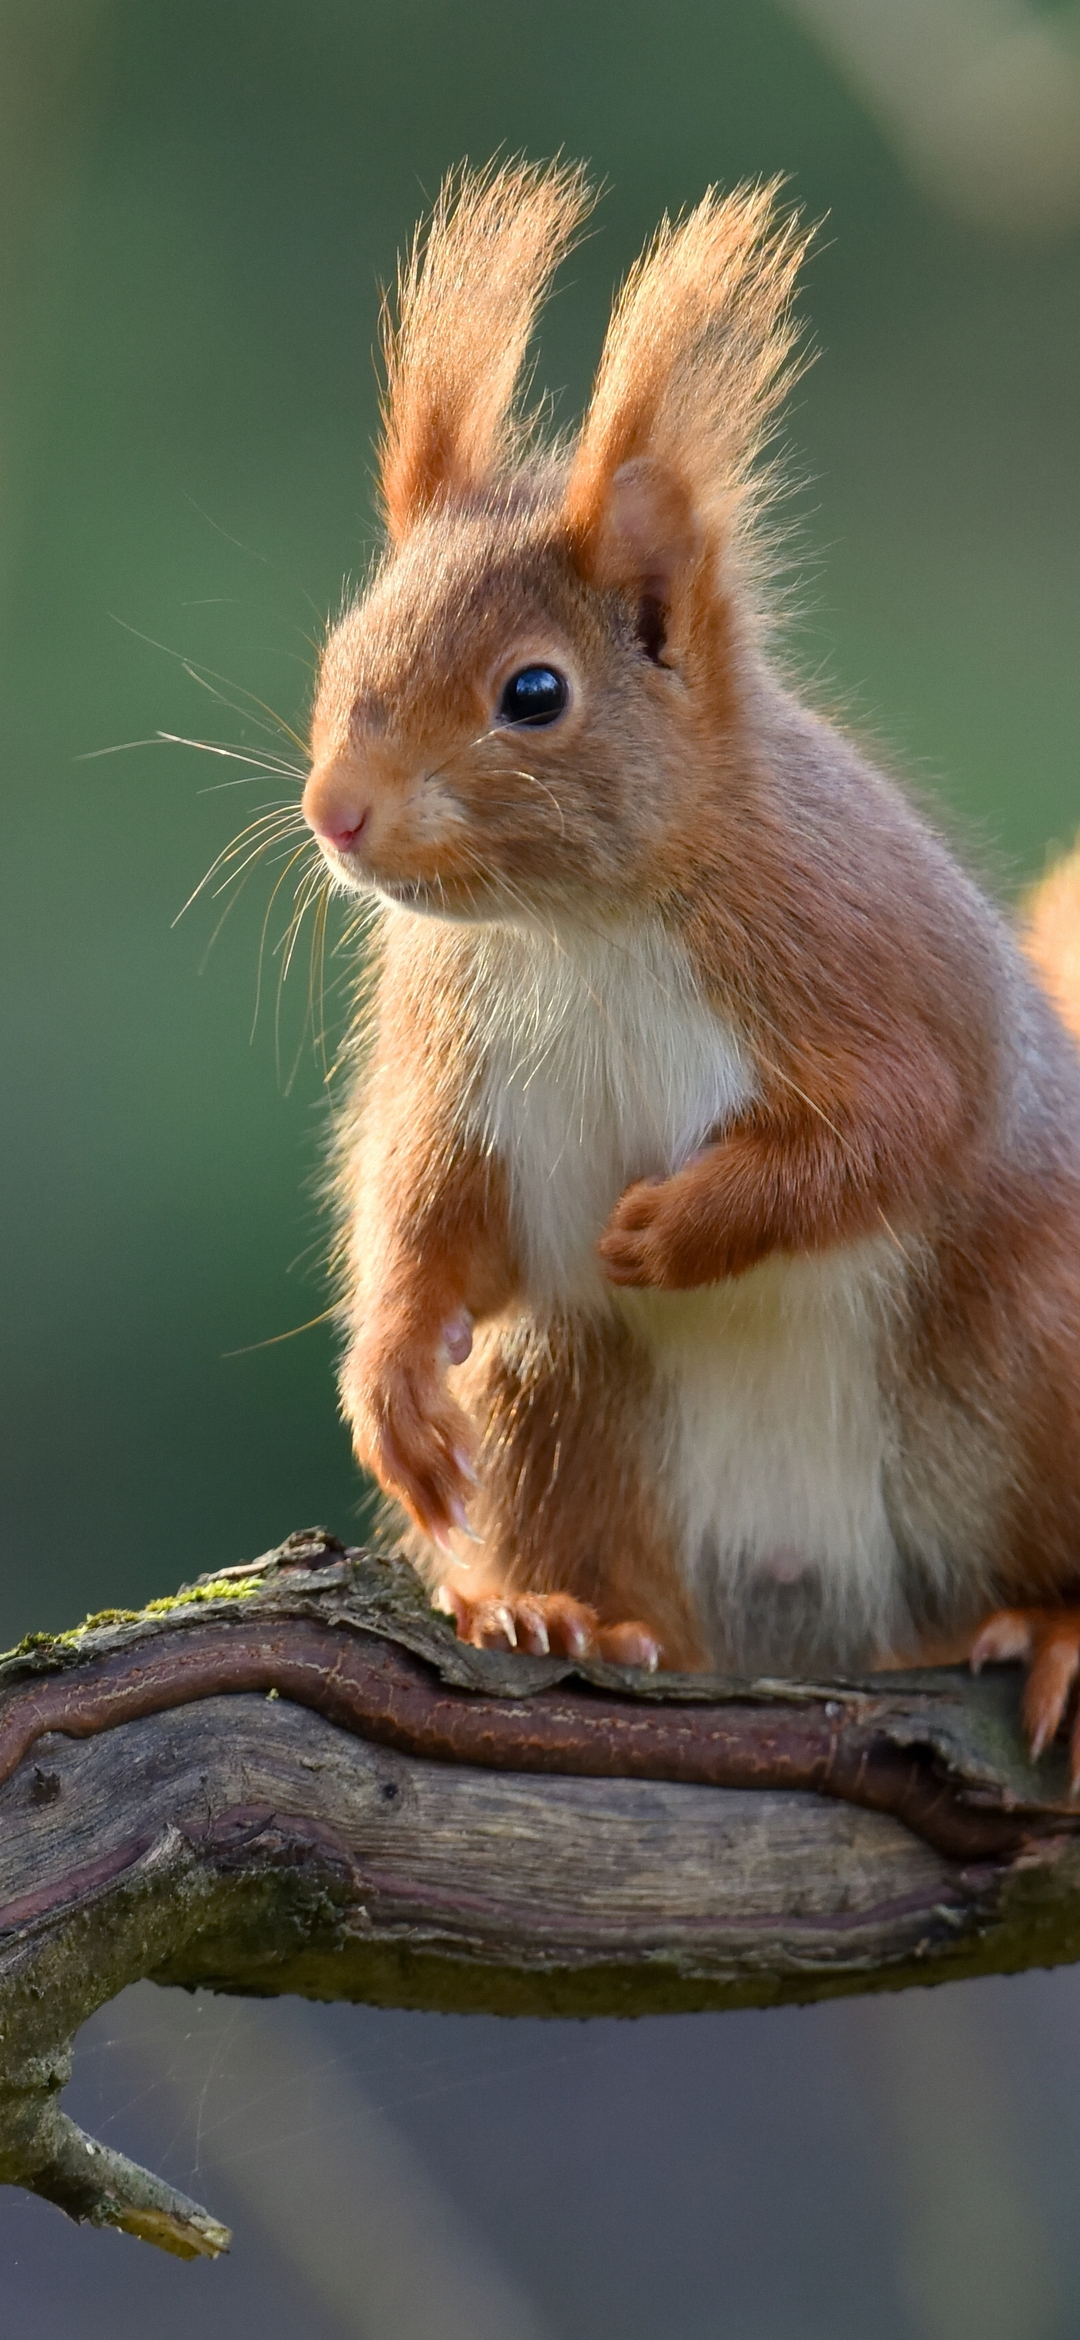 Image: Squirrel, fluffy, sitting, tree, branch